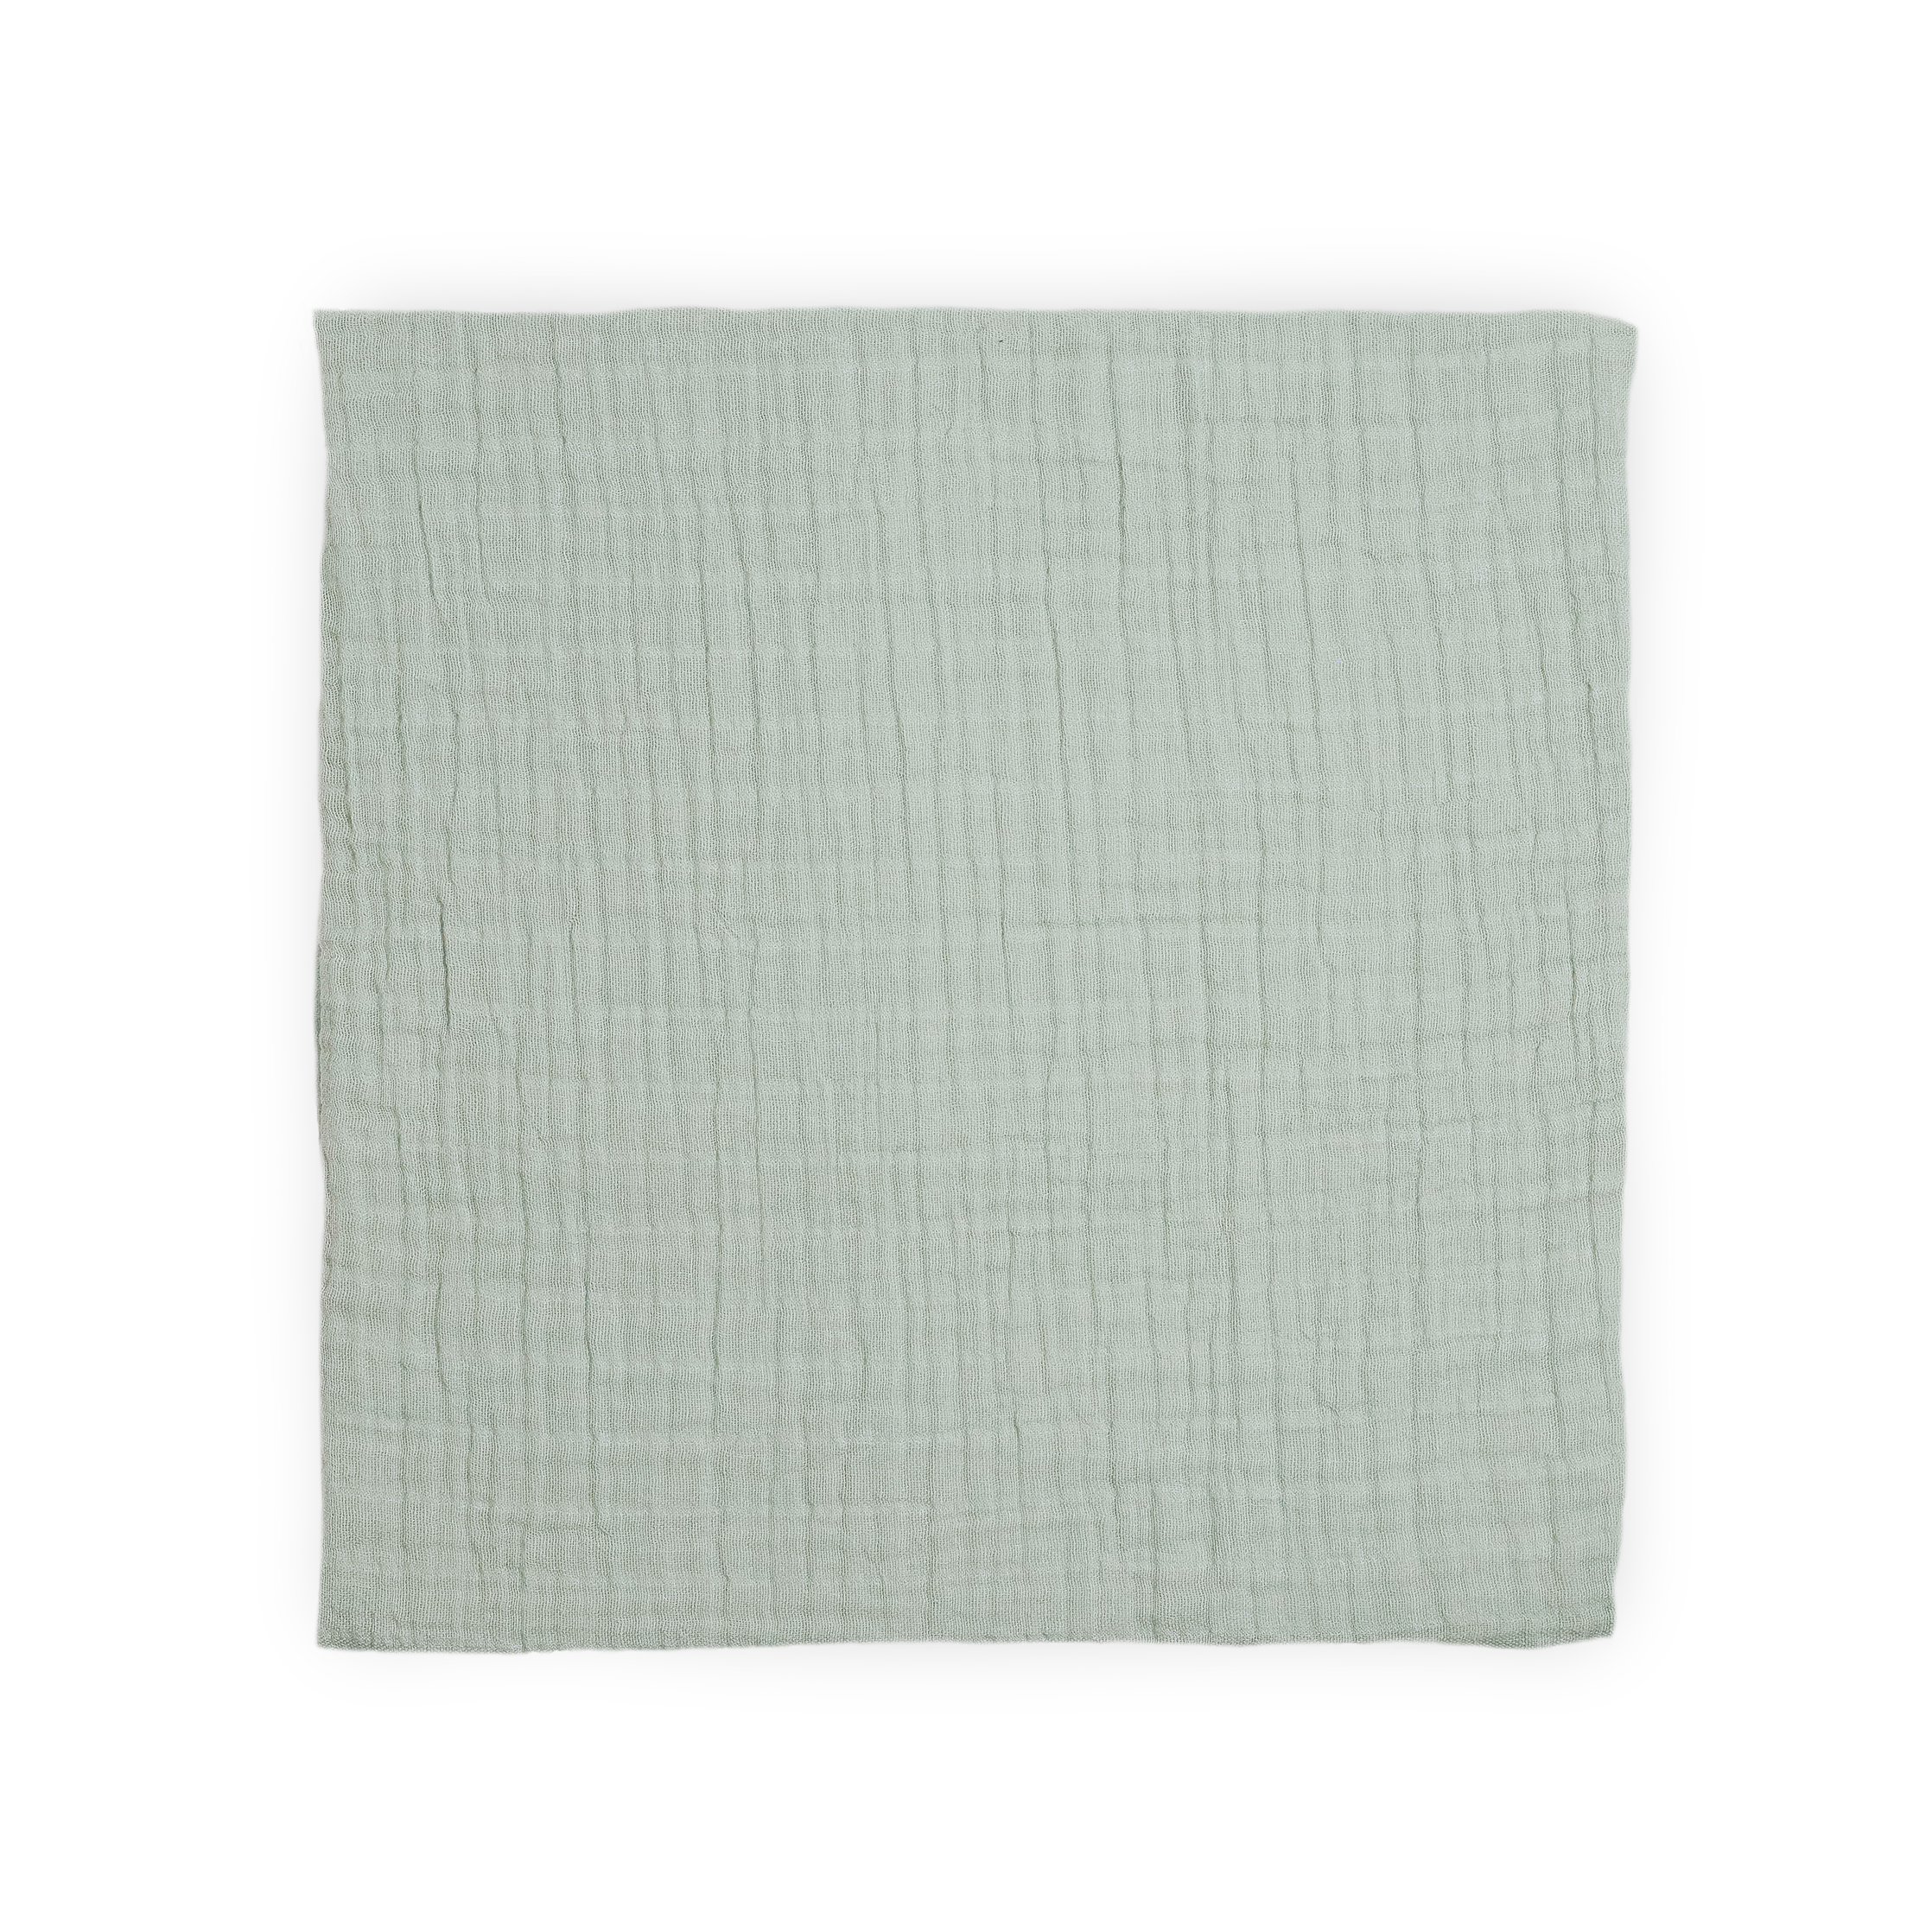 Organic Cotton Muslin Swaddle Blanket - White Sage